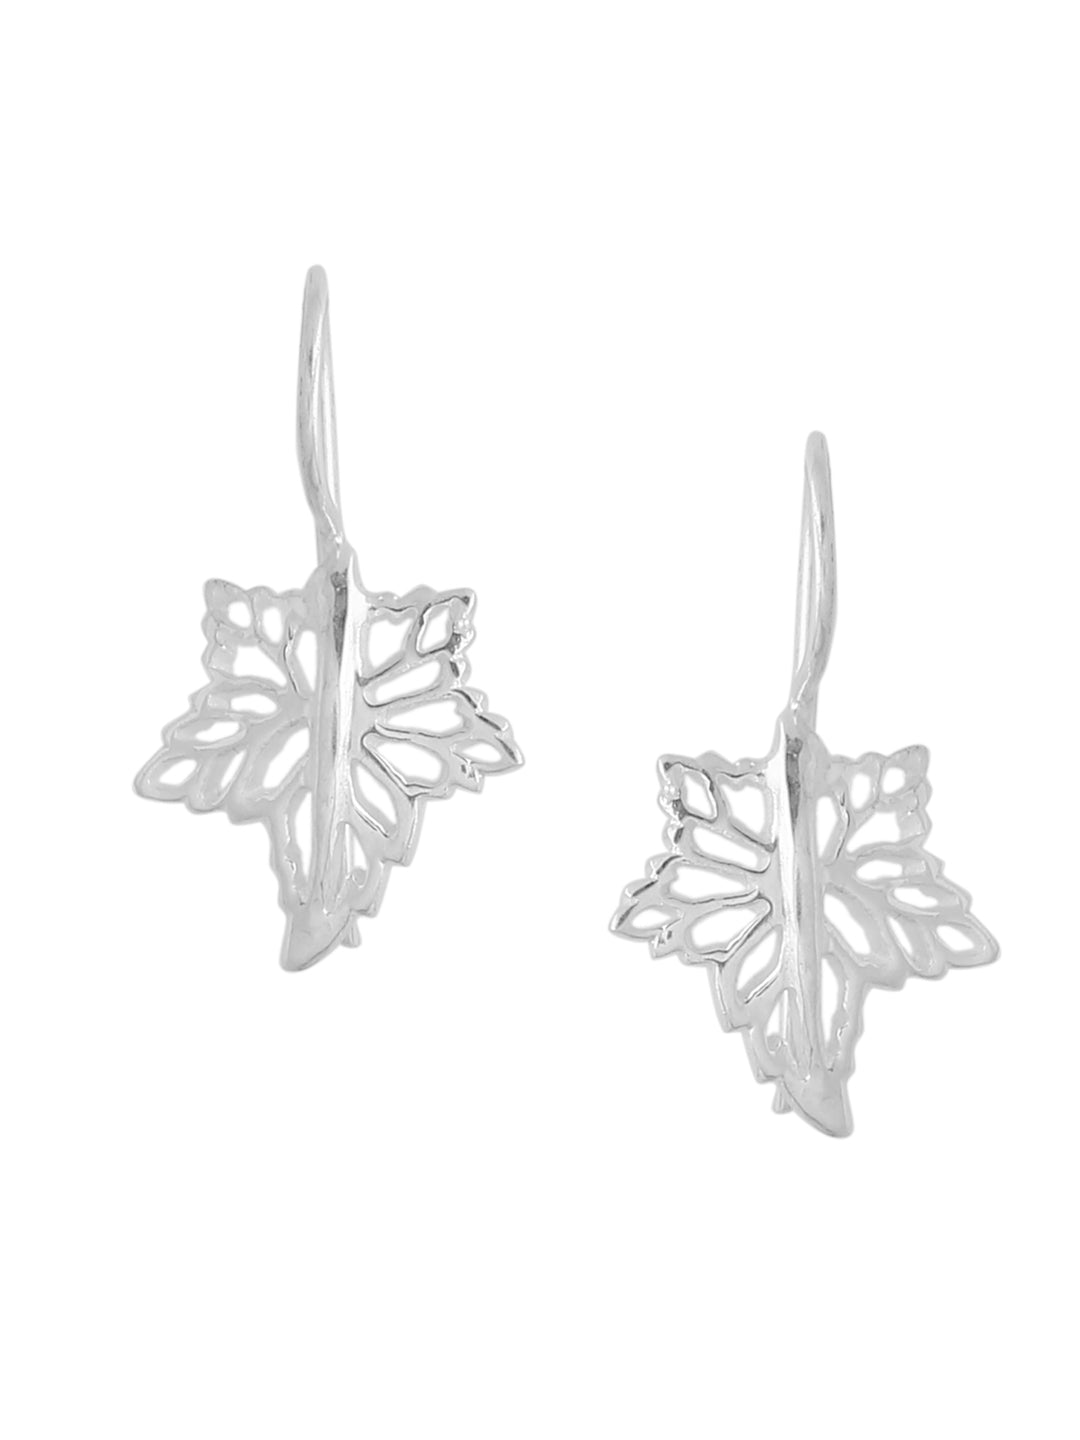 Enchanting Leaf Motif Silver Earrings